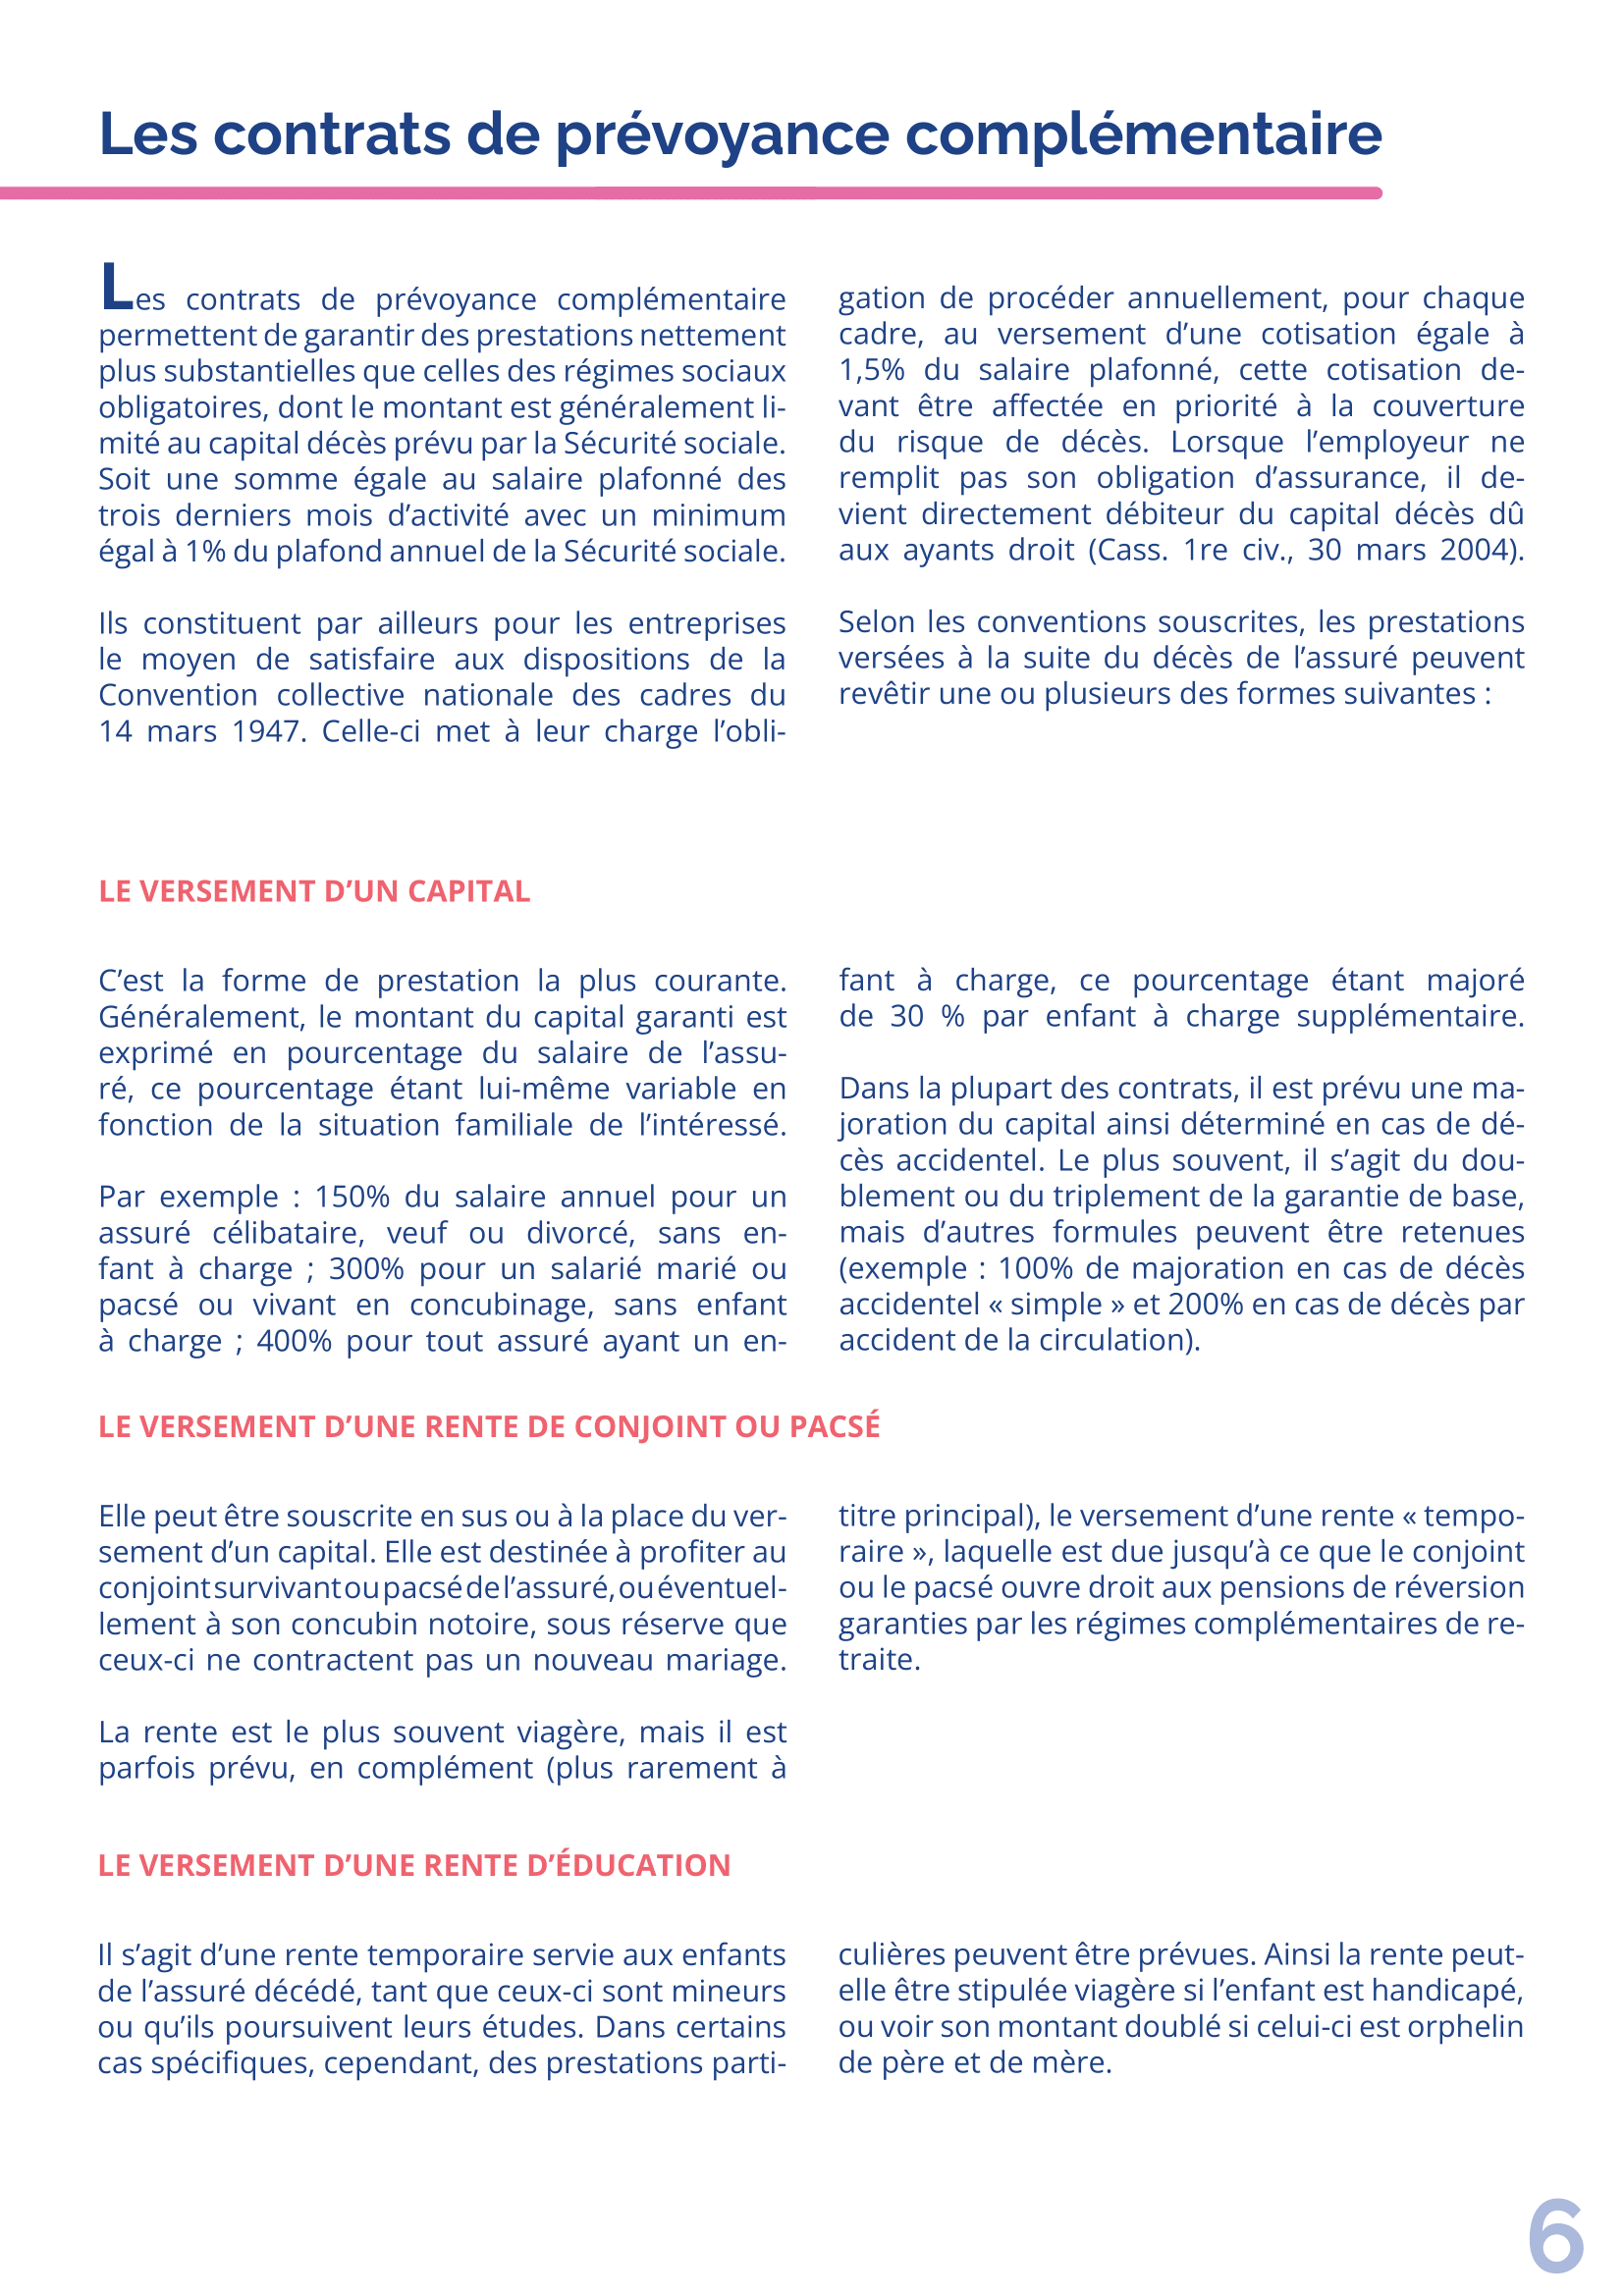 Guide du responsable RH (page 6)